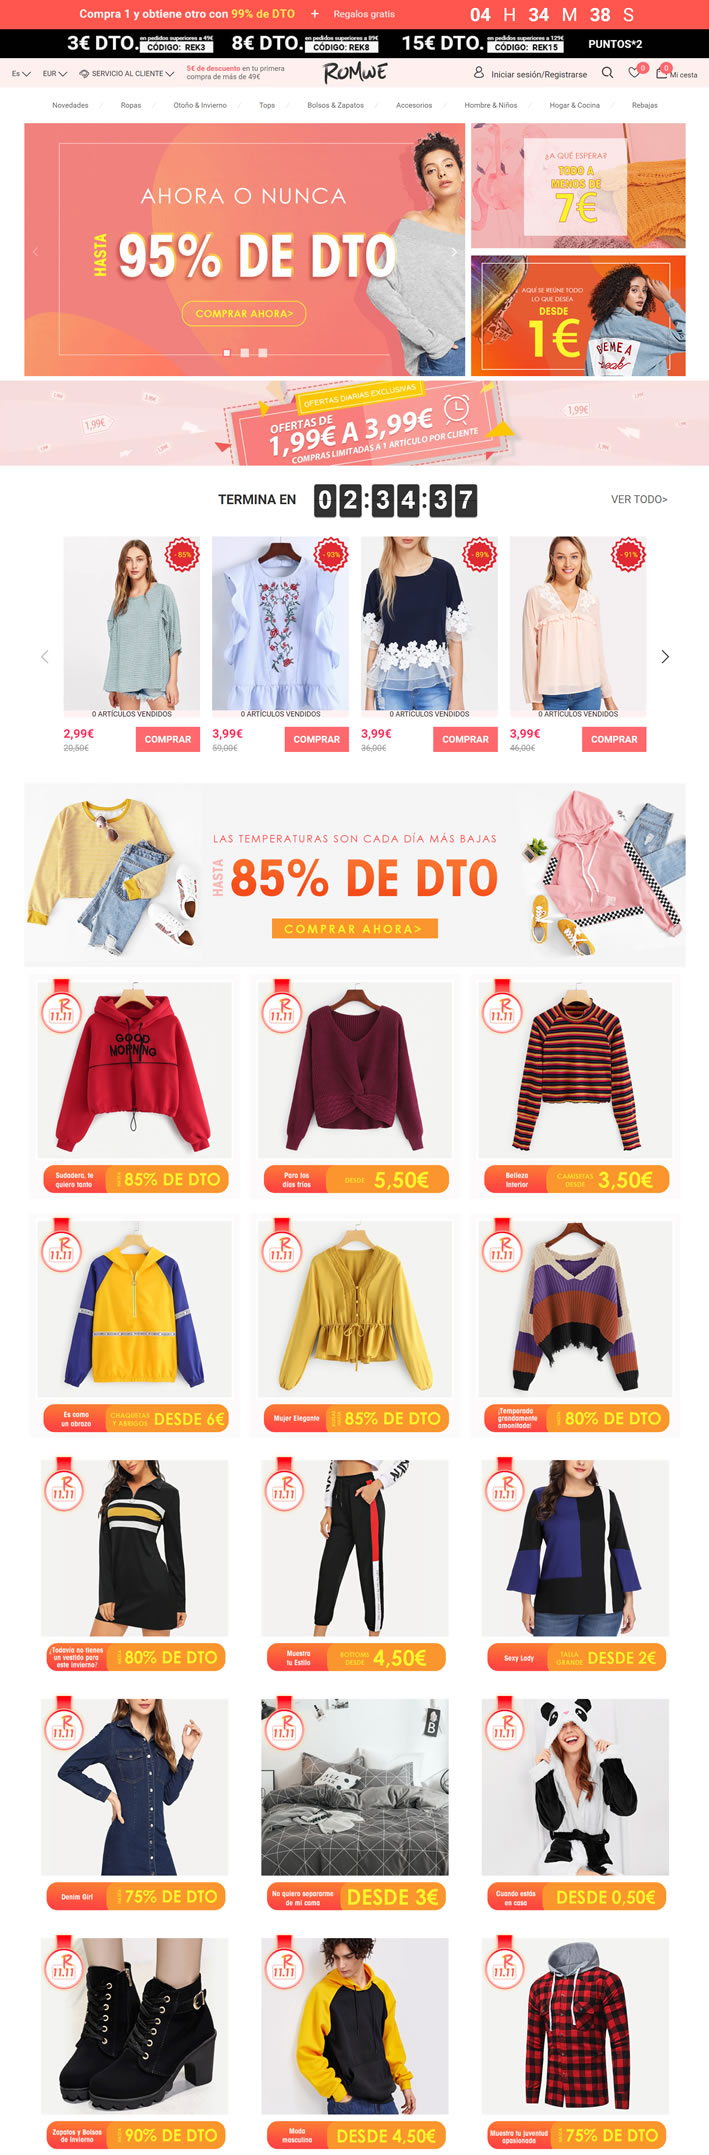 ROMWE Spain: Fashion Women’s Shopping Website